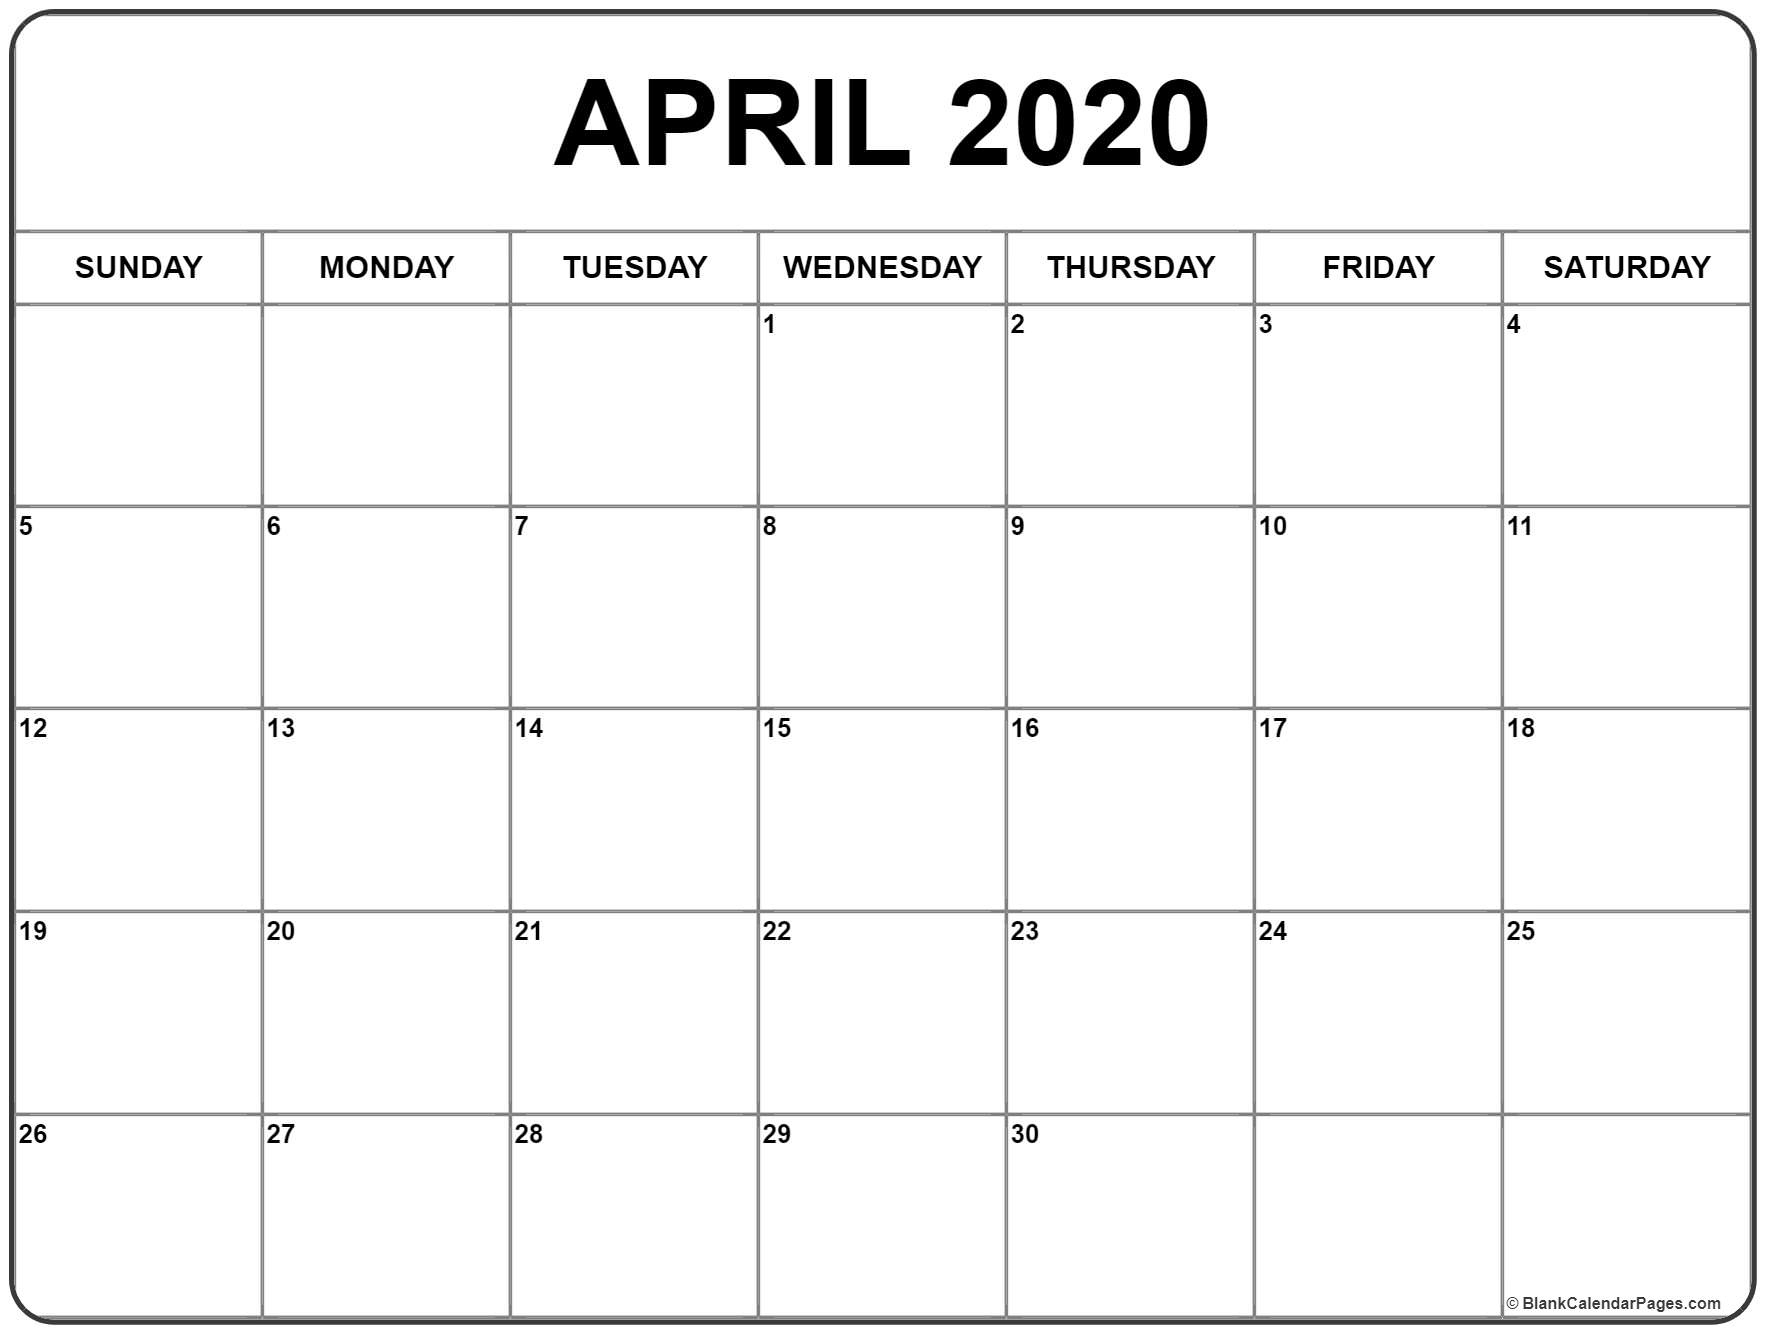 April 2020 Calendar | 56+ Templates Of 2020 Printable Calendars 2020 Calendar Time And Date